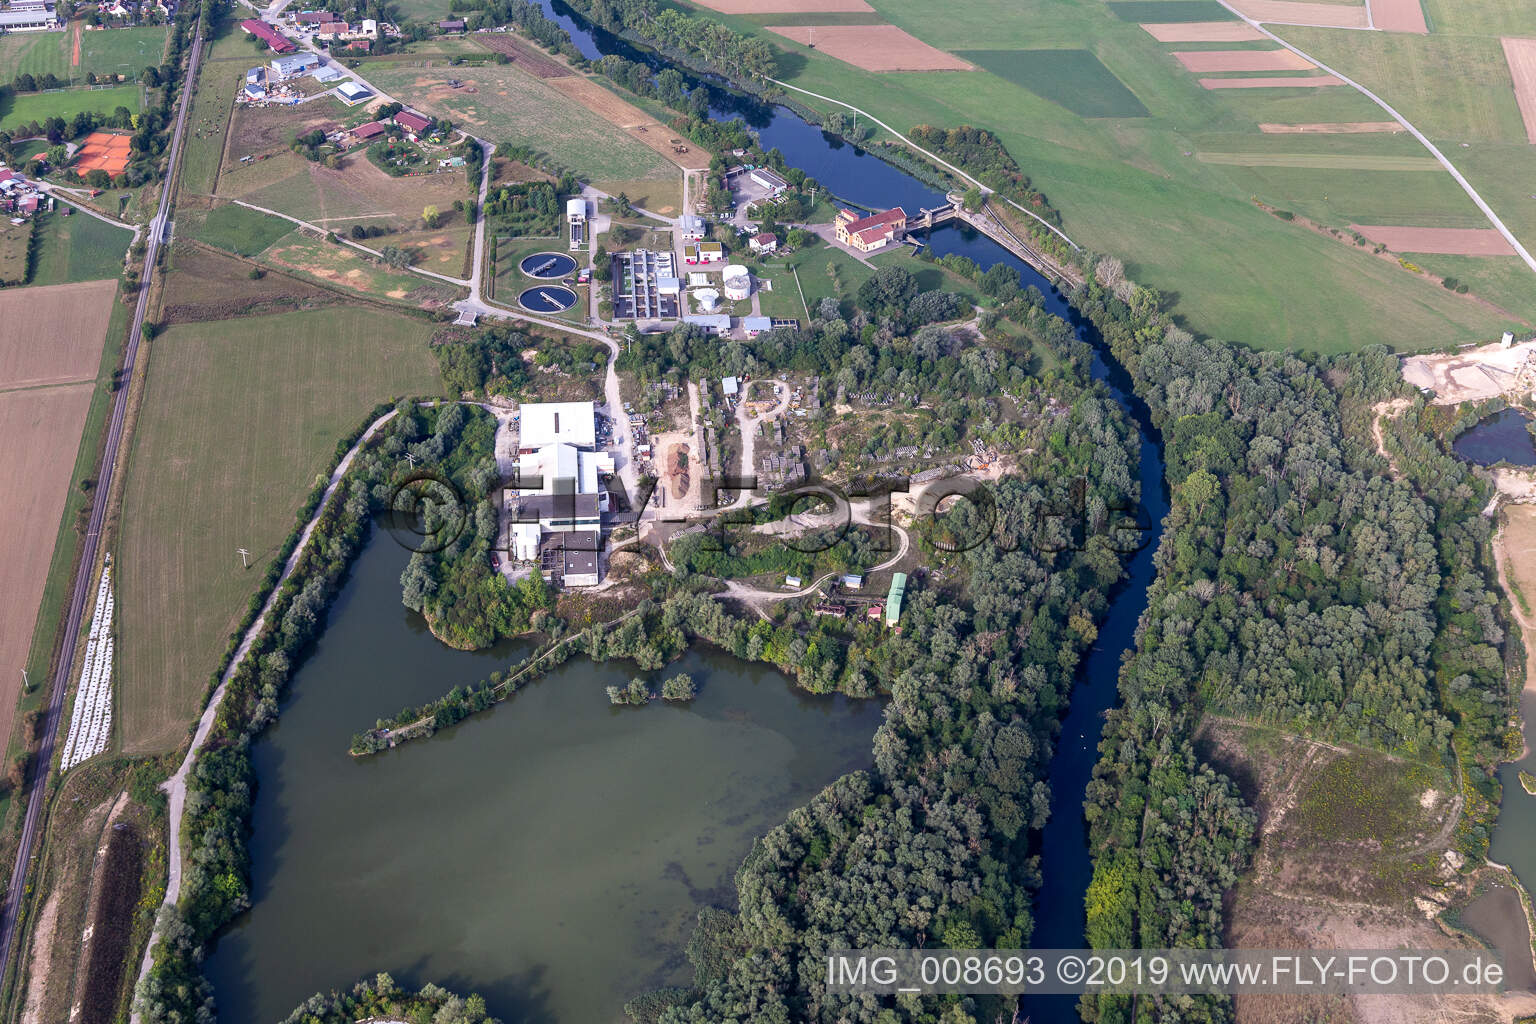 Kiebingen sewage treatment plant in Rottenburg am Neckar in the state Baden-Wuerttemberg, Germany